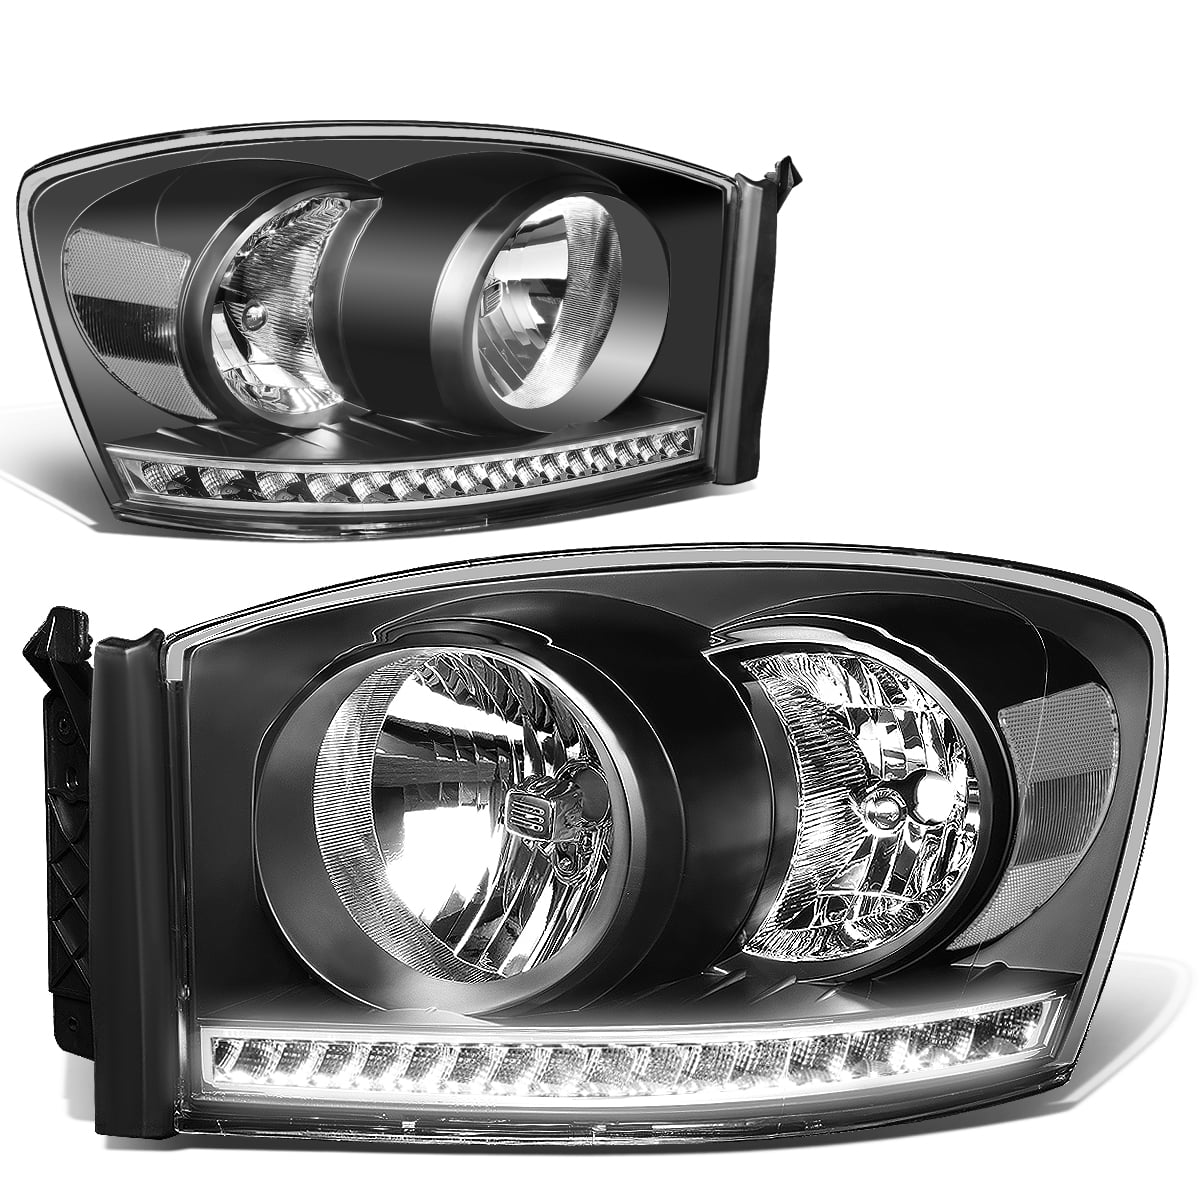 Black For Dodge Ram 3rd Gen Pair of OE Style Replacement Bumper Fog Light/Lamp Bezel Cover 